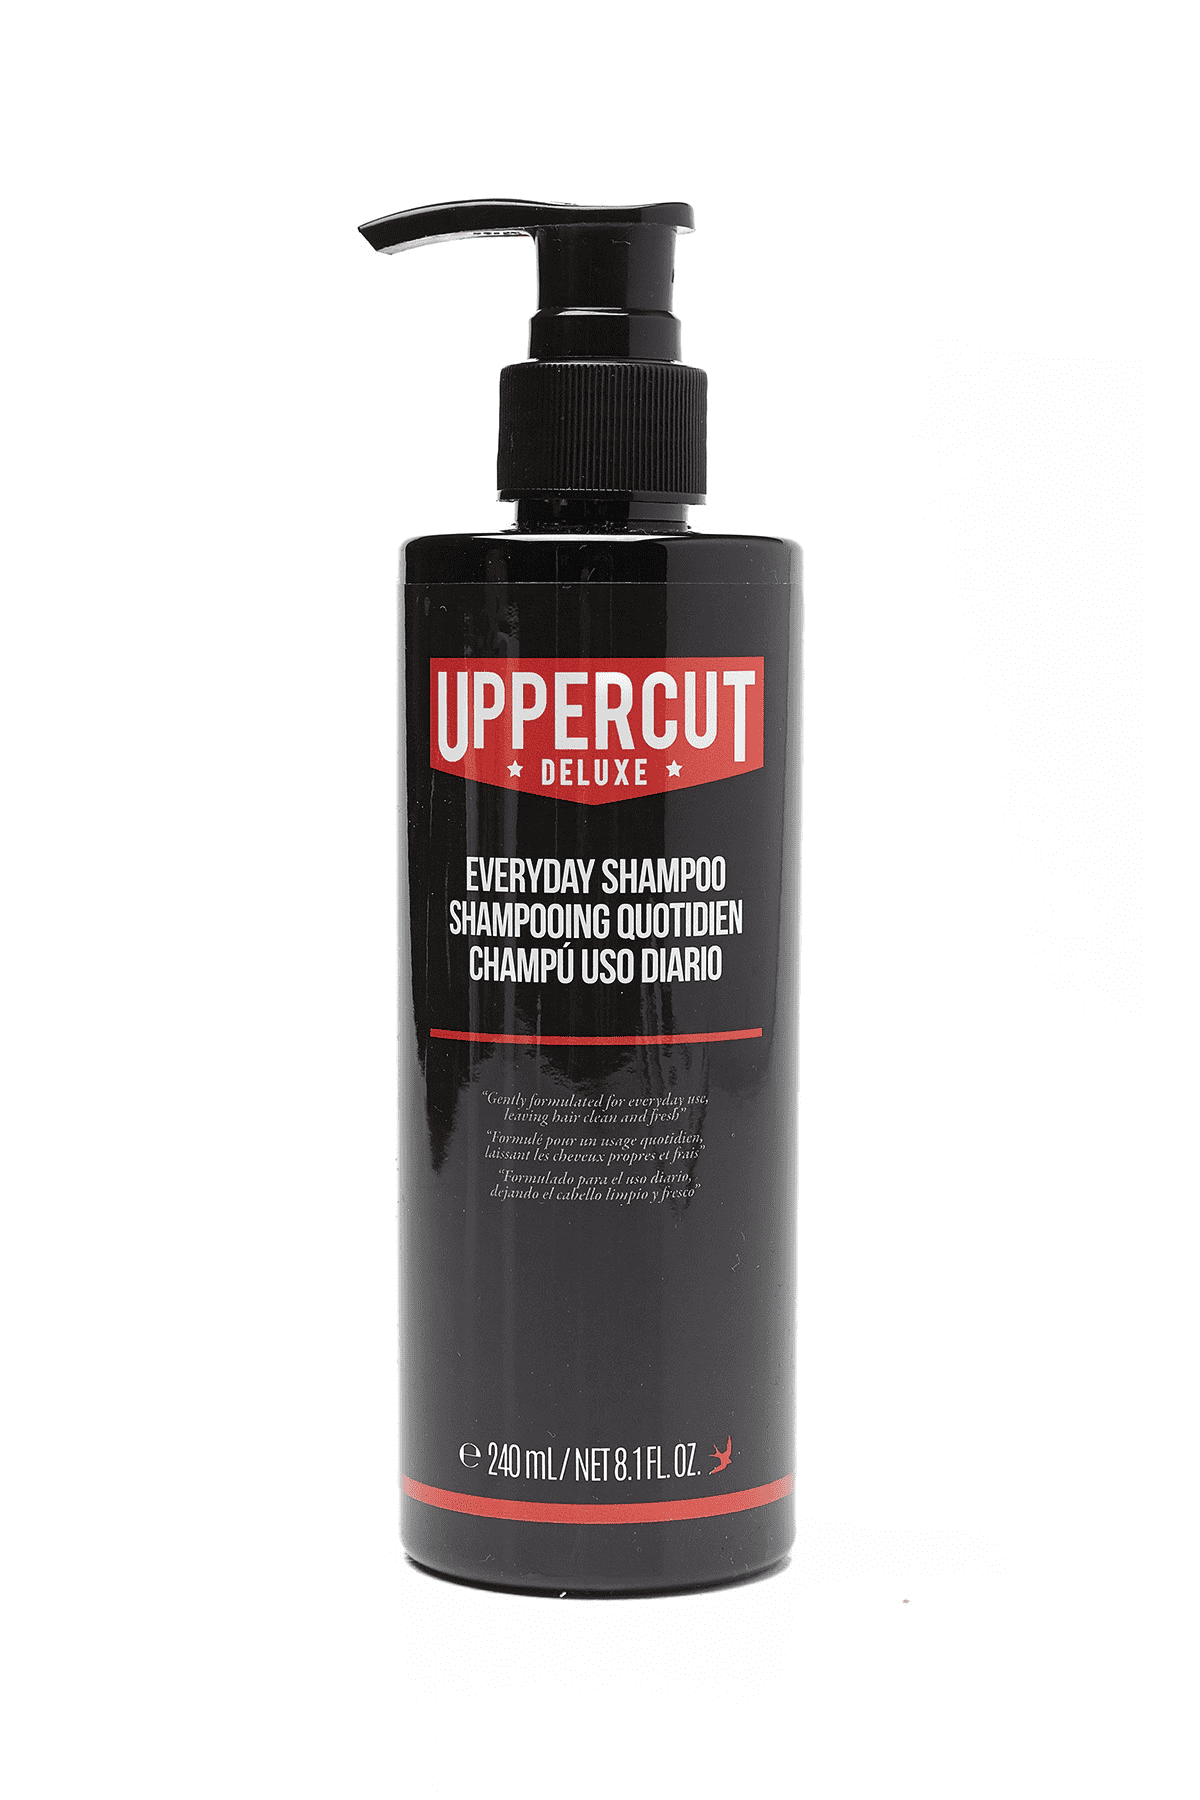 Uppercut Deluxe Everyday shampoo